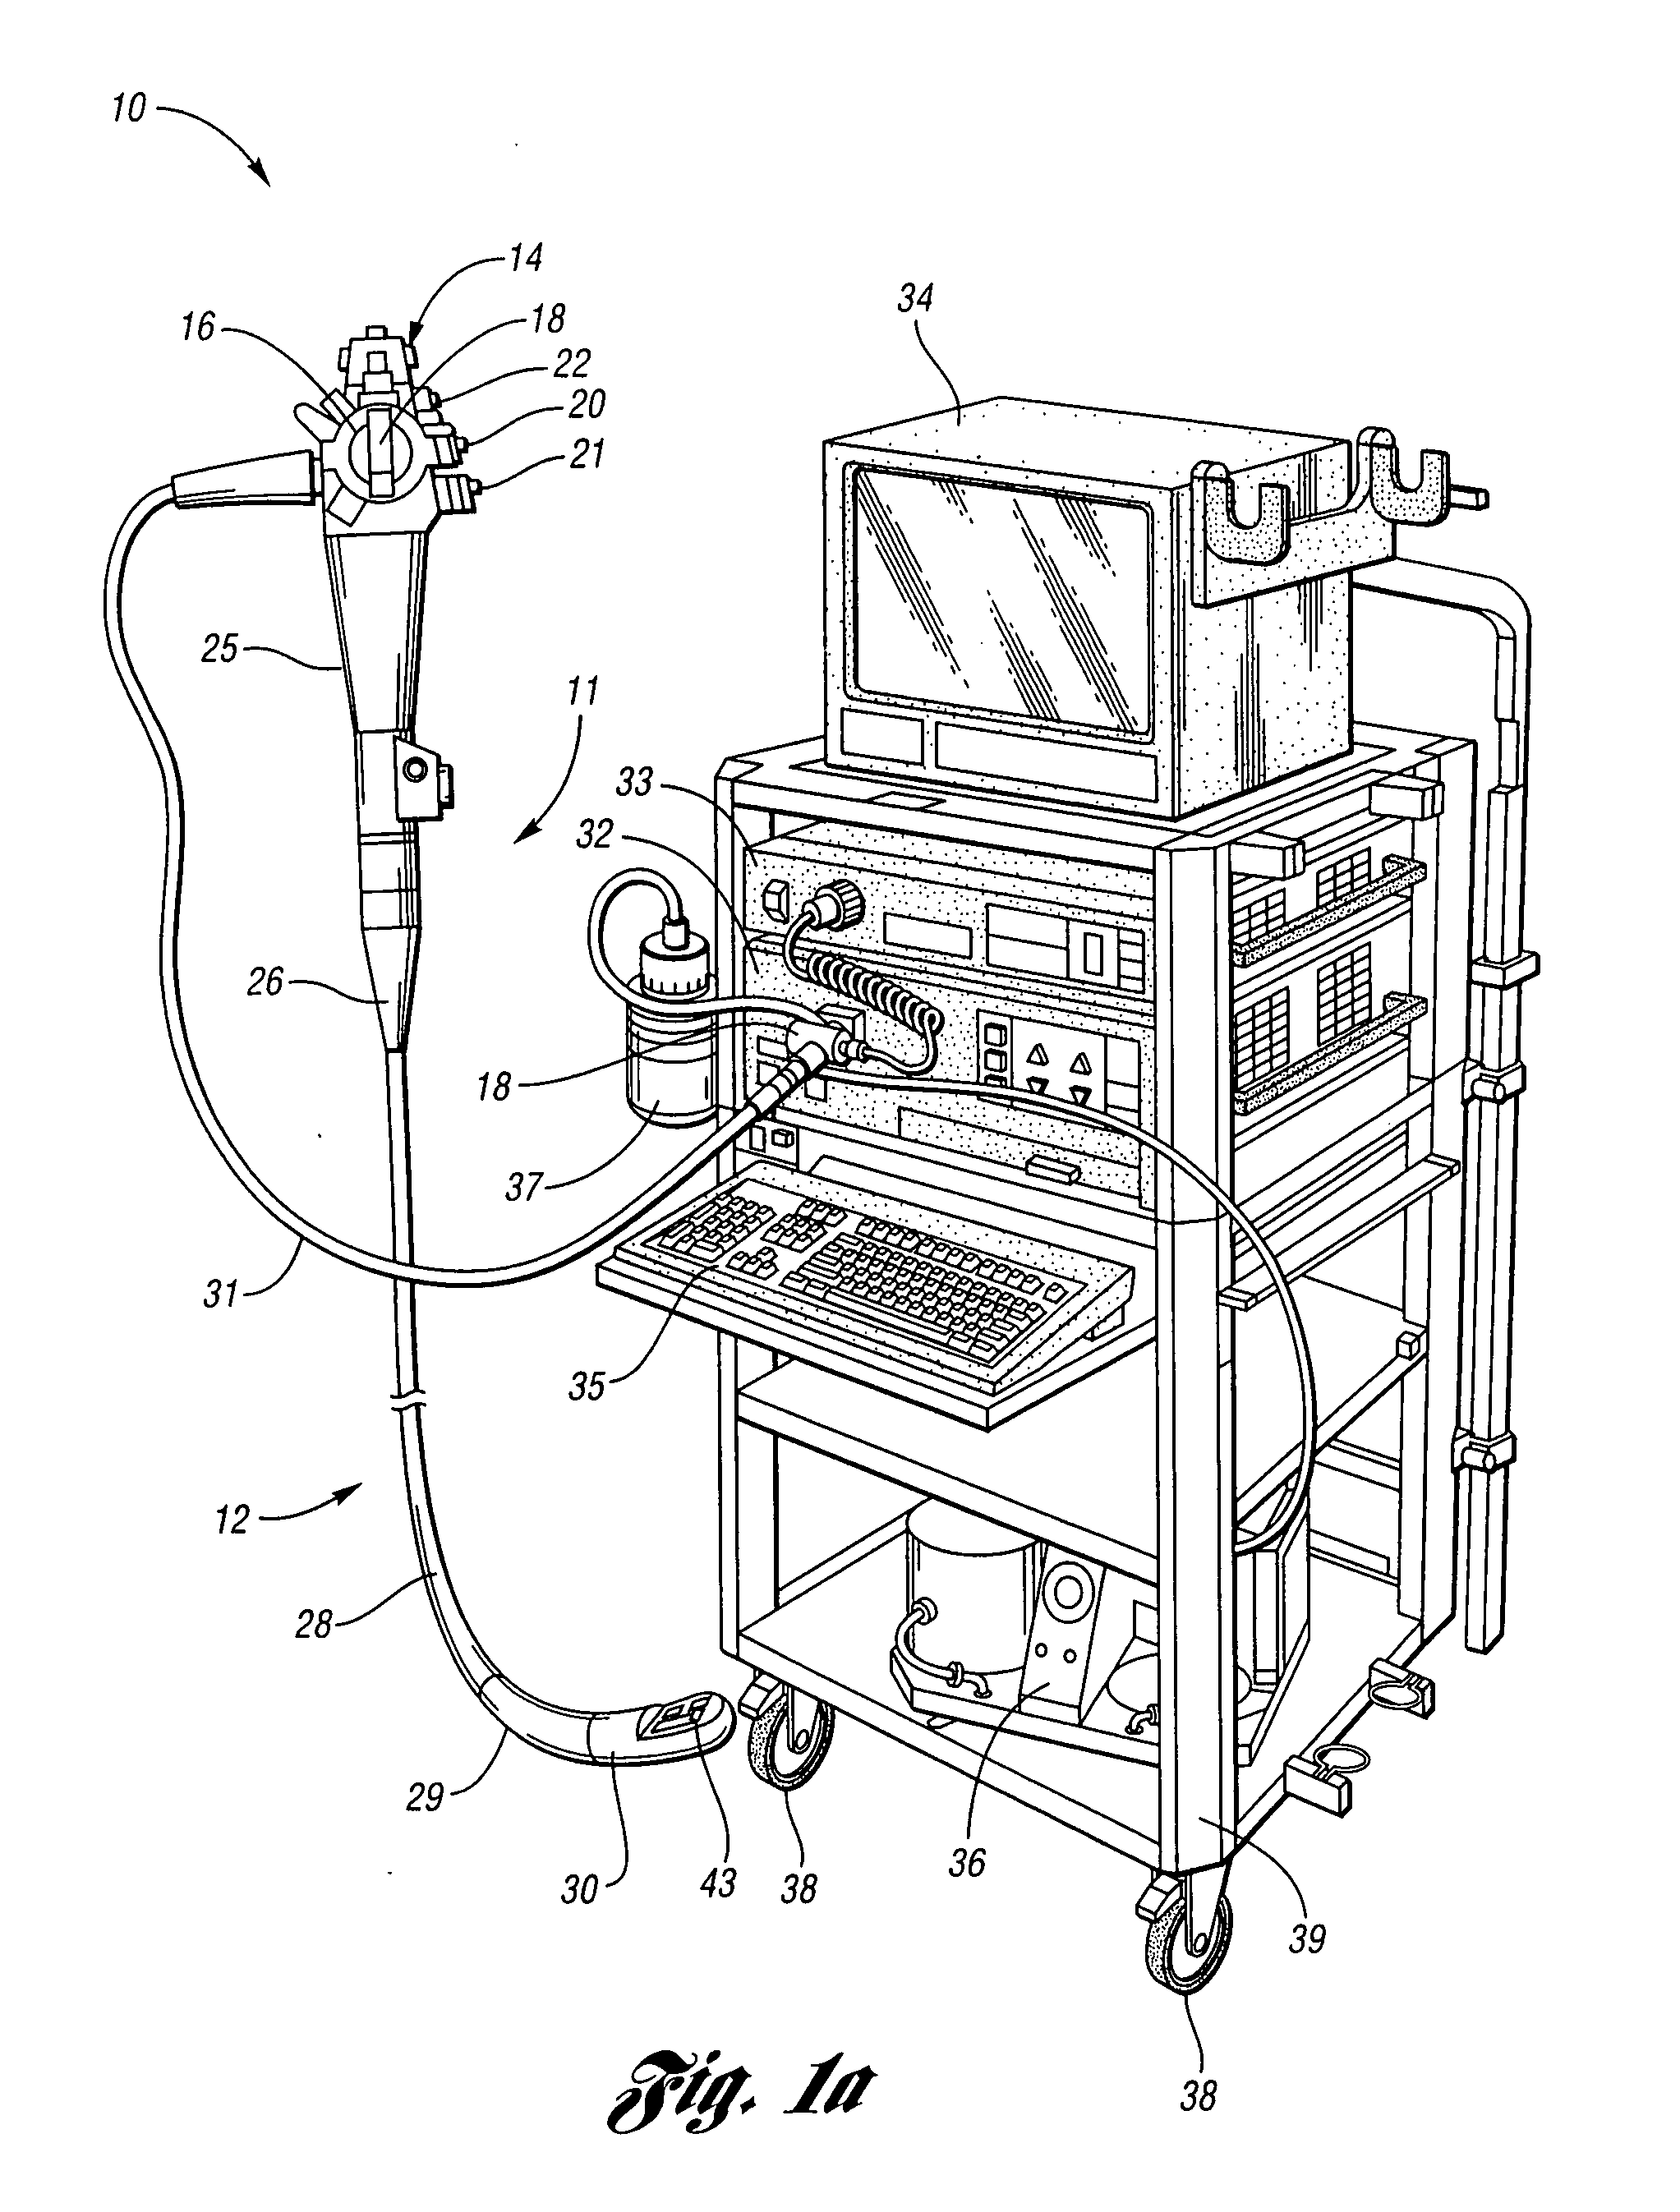 Endoscopic elevator apparatus